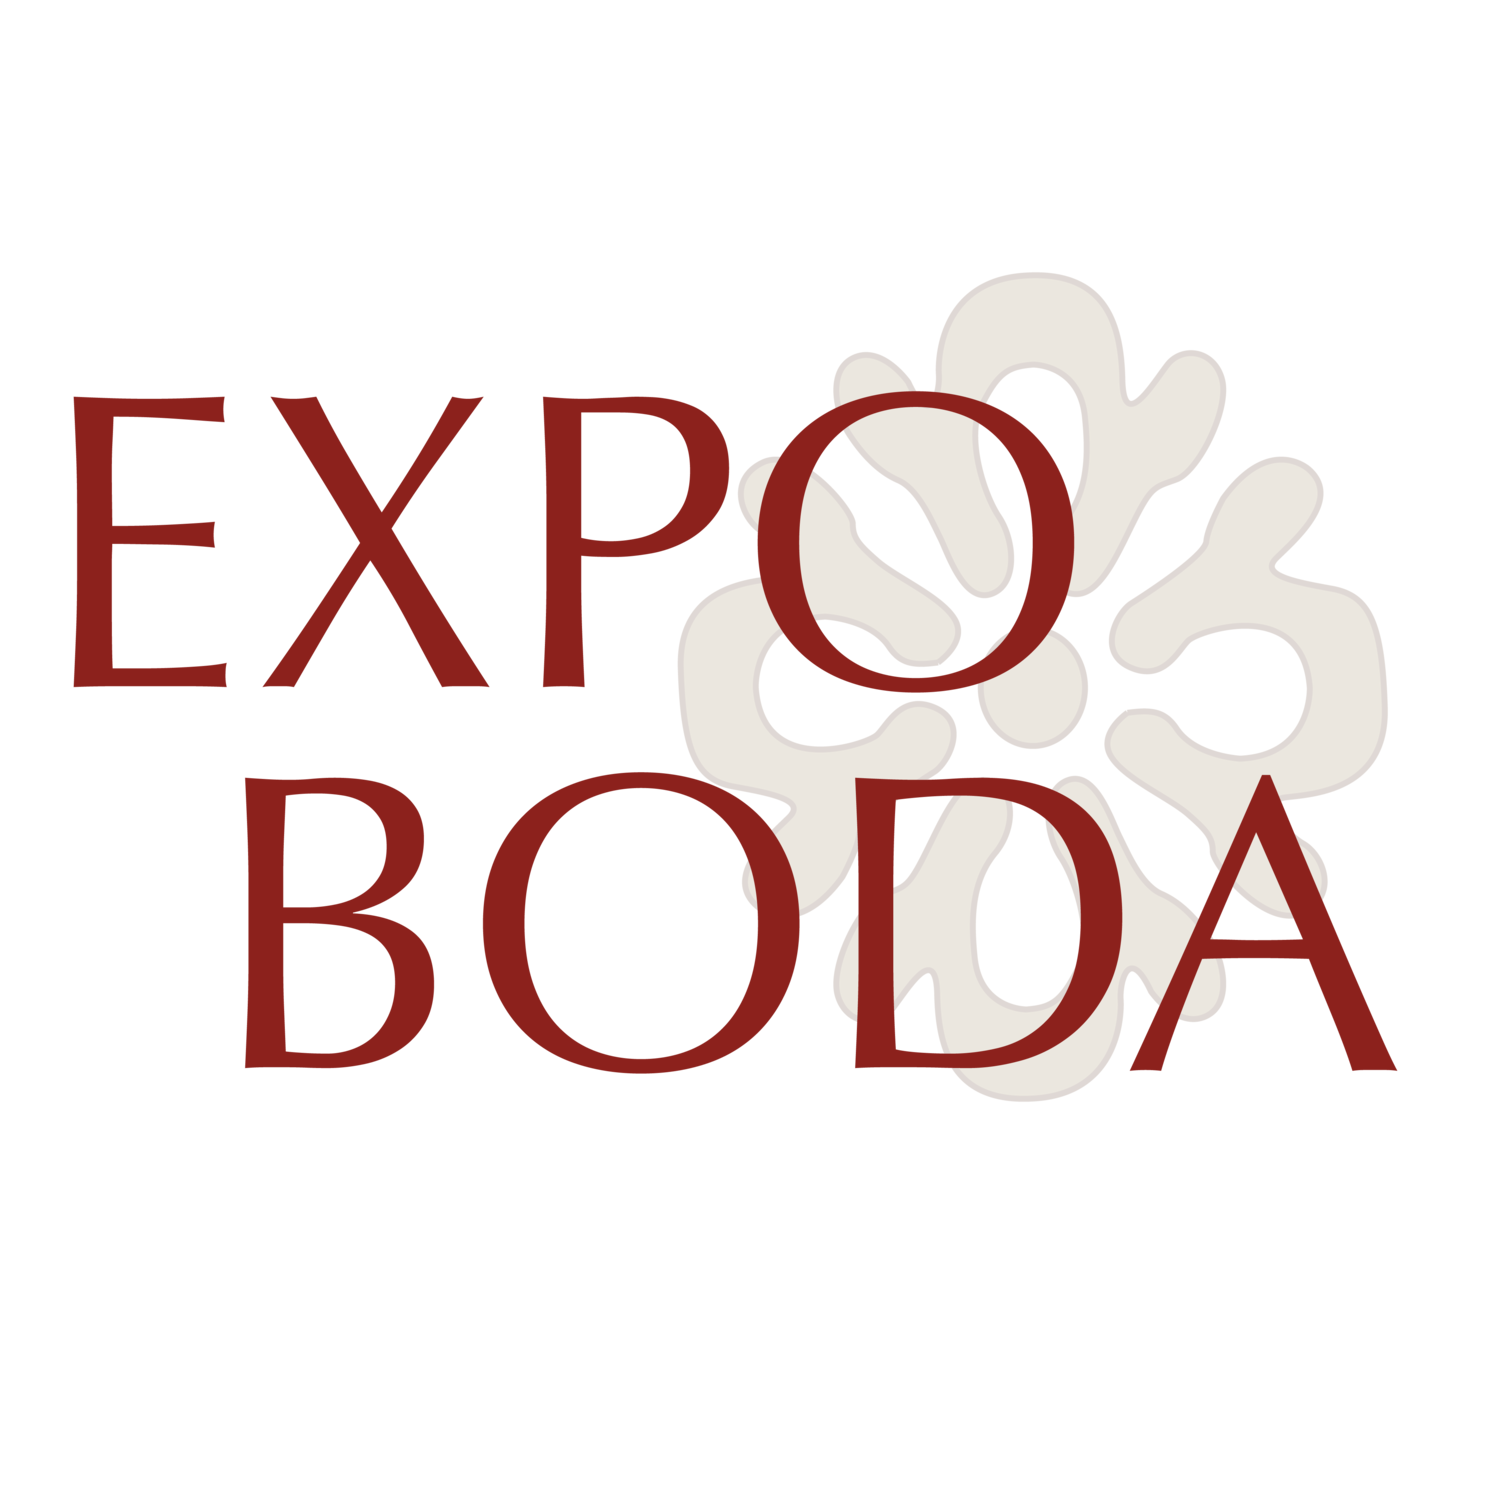 Expo Boda Guatemala